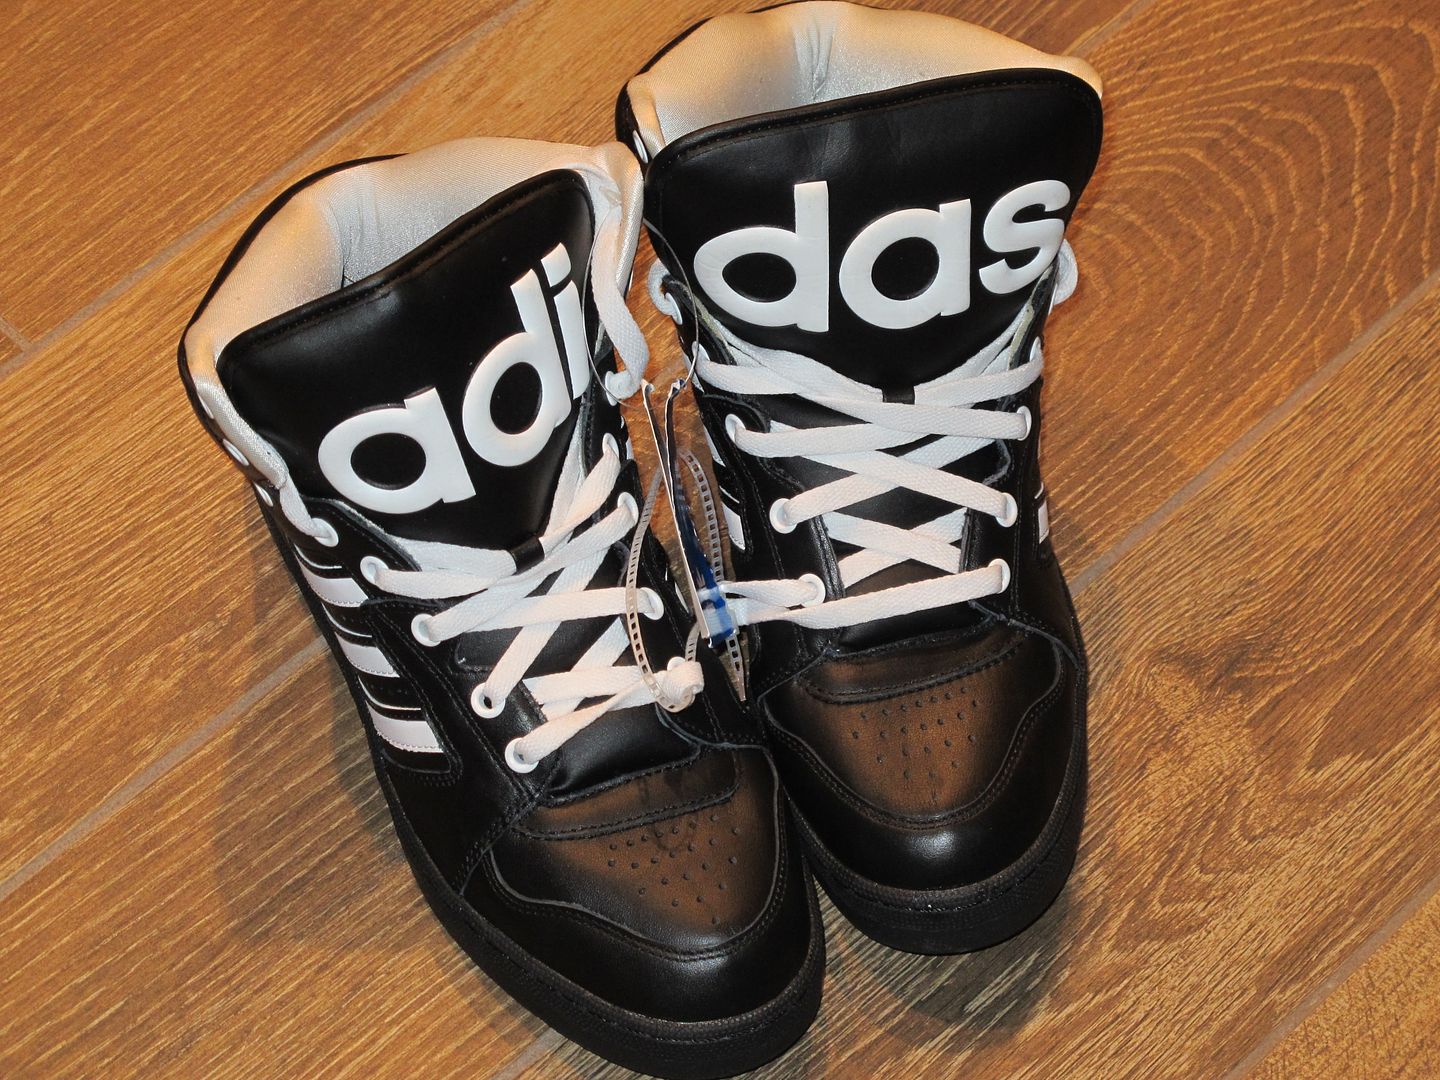 New Men's Adidas Jeremy Scott Instinct Hi Black Shoes Size 8 5 G61087